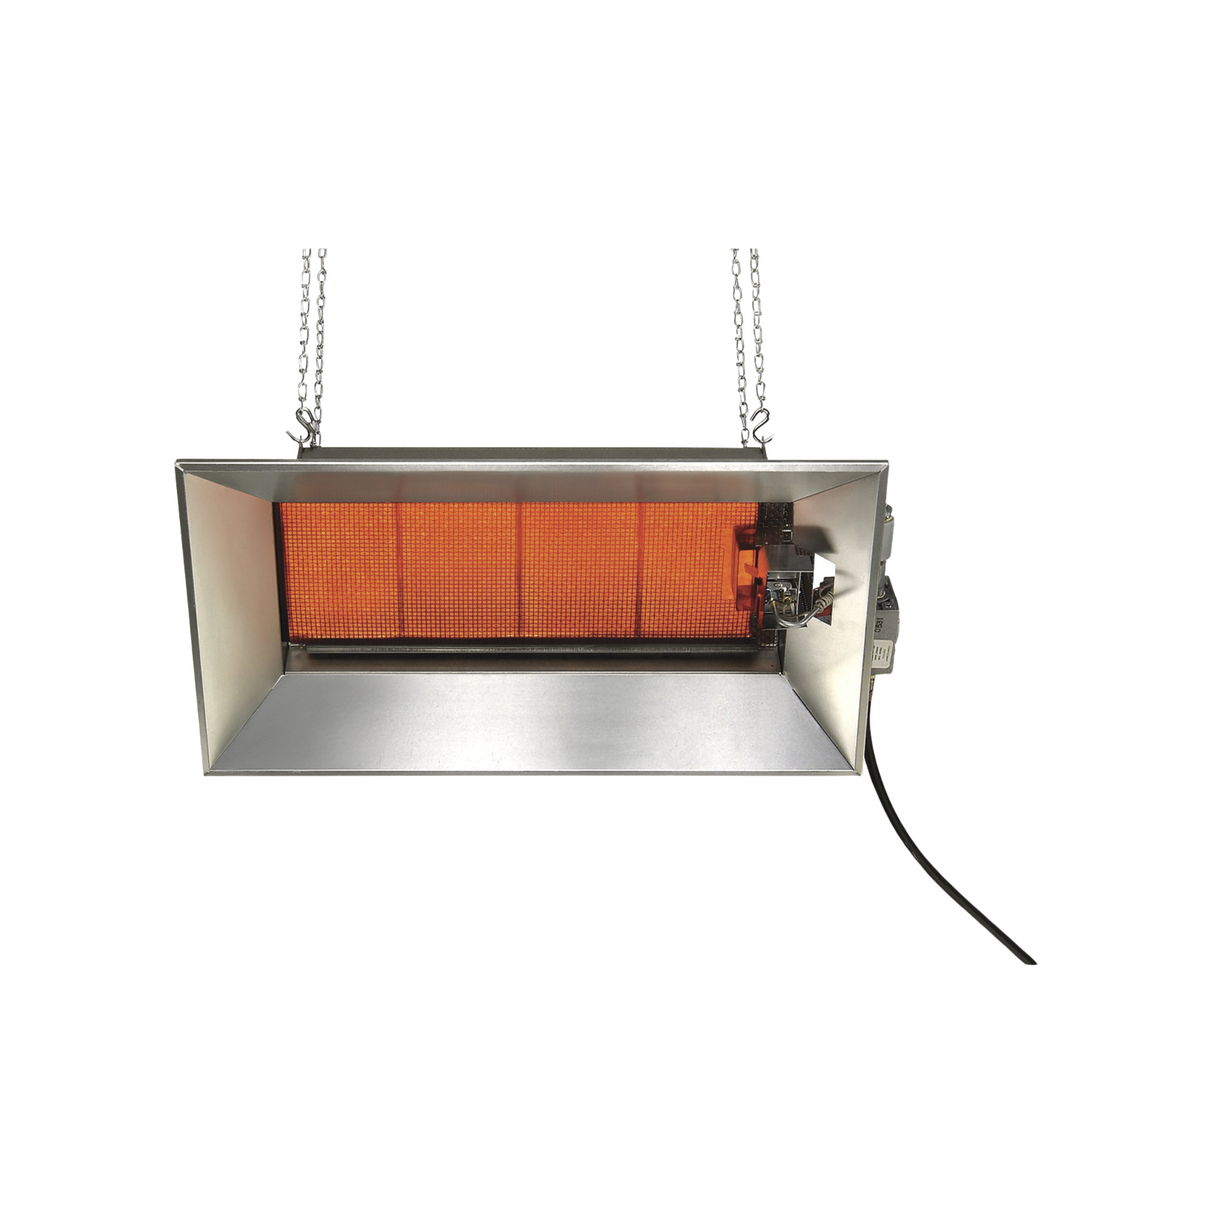 Sunstar Heating Products SGM6-N1A 52000 BTU Overhead Gas Heater, Natural Gas